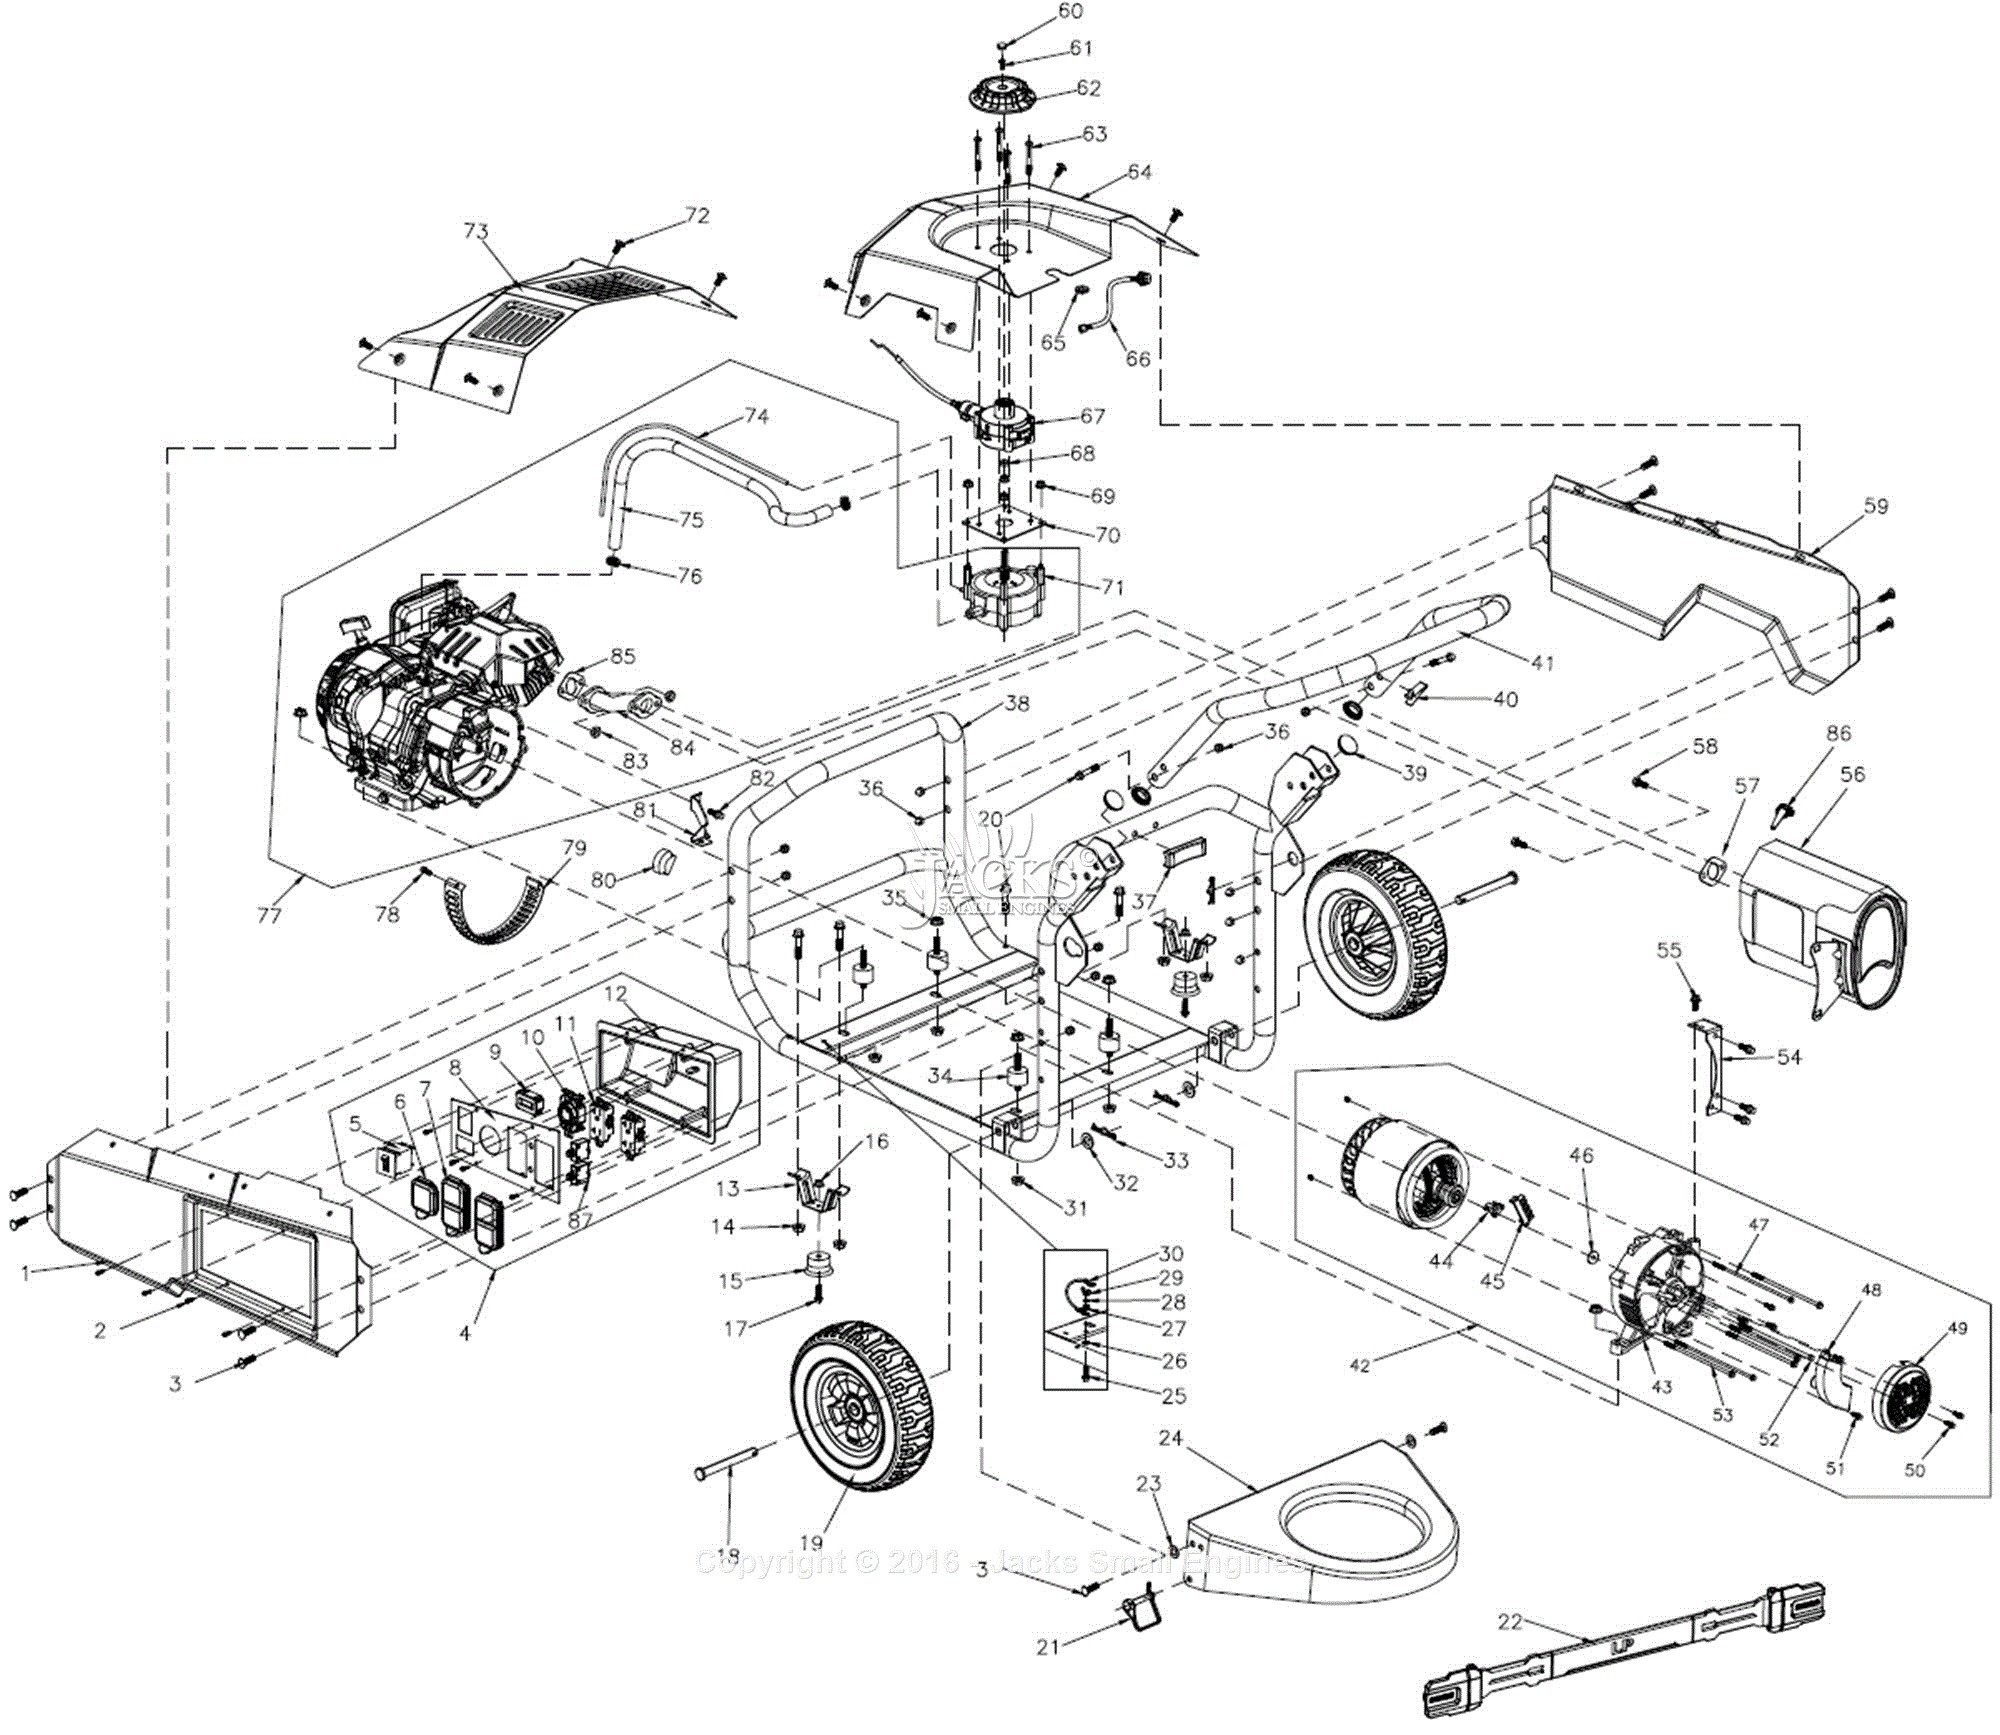 Engine Block Parts Diagram Auto Engine Parts Diagram Generac Lp5500 Parts Diagram for Full Of Engine Block Parts Diagram